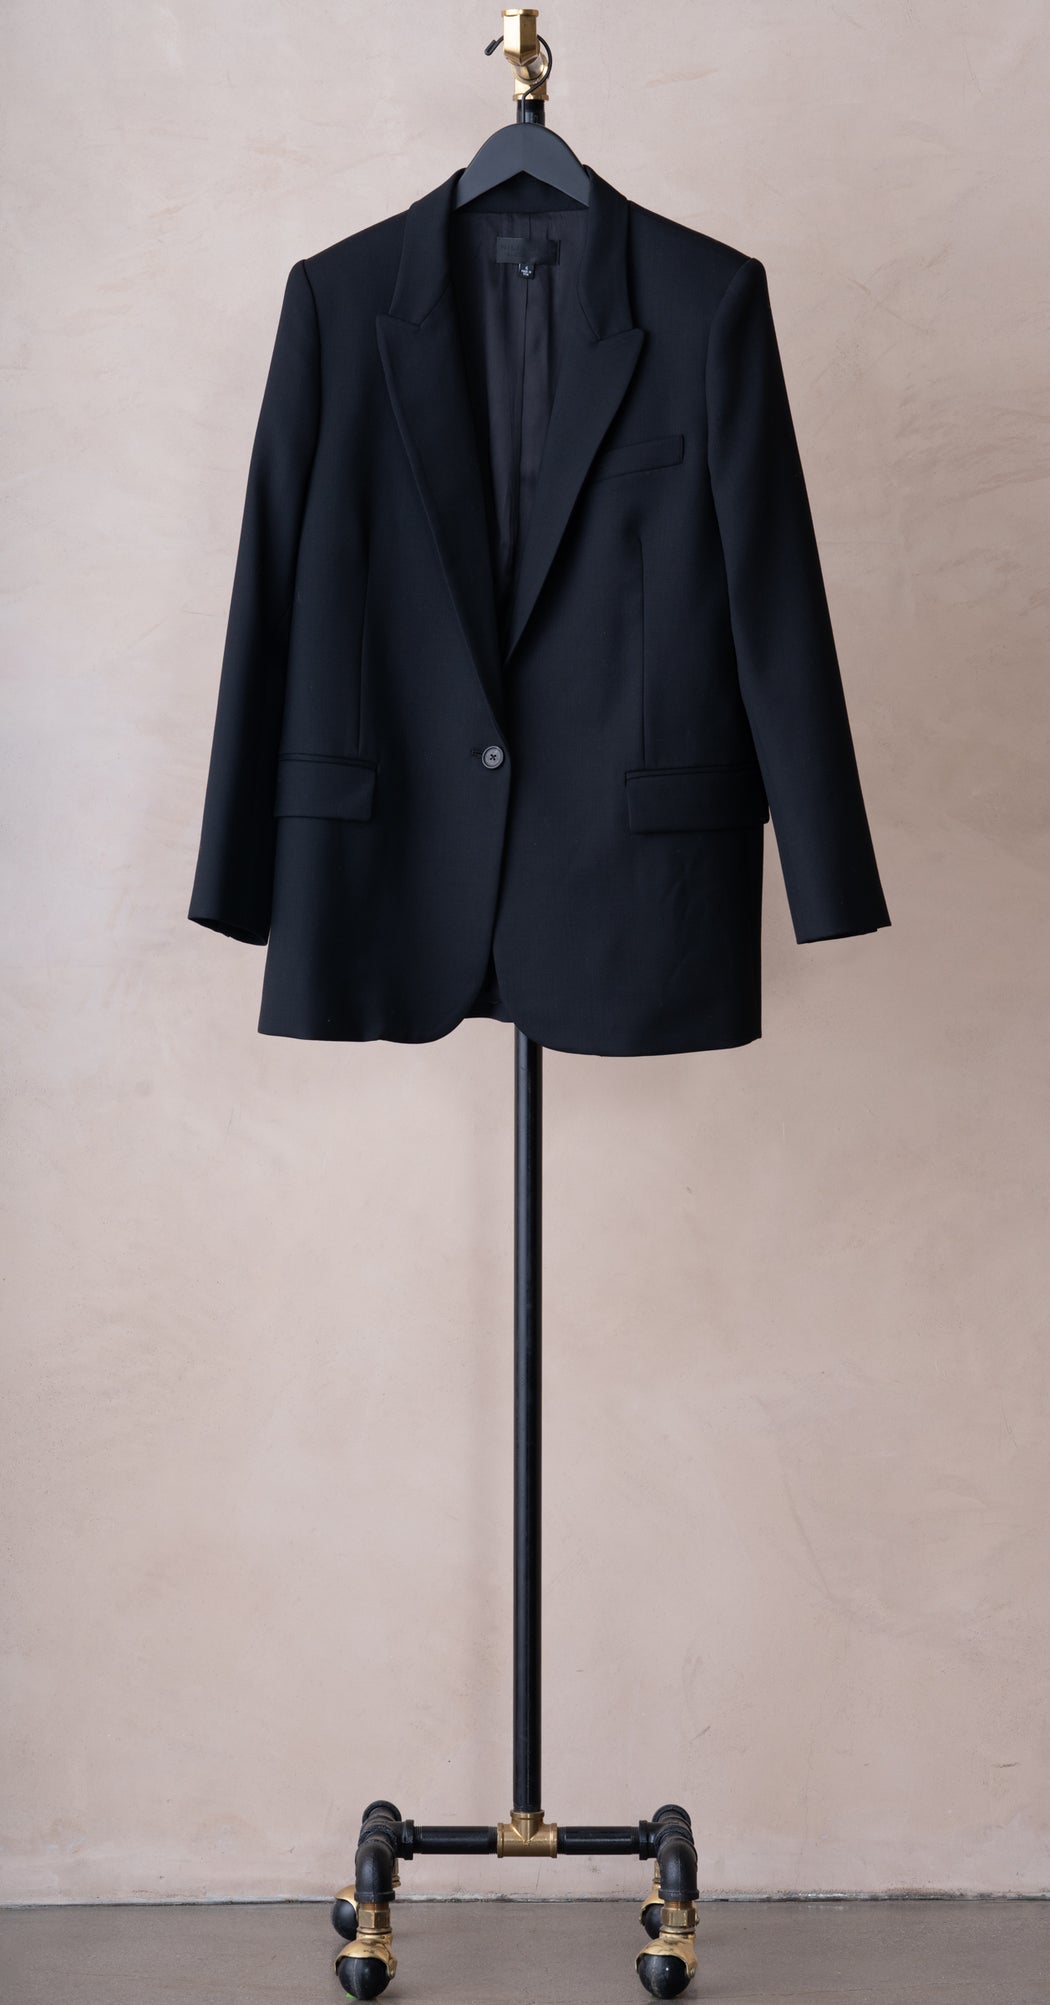 Nili Lotan Adele Tailored Jacket Black